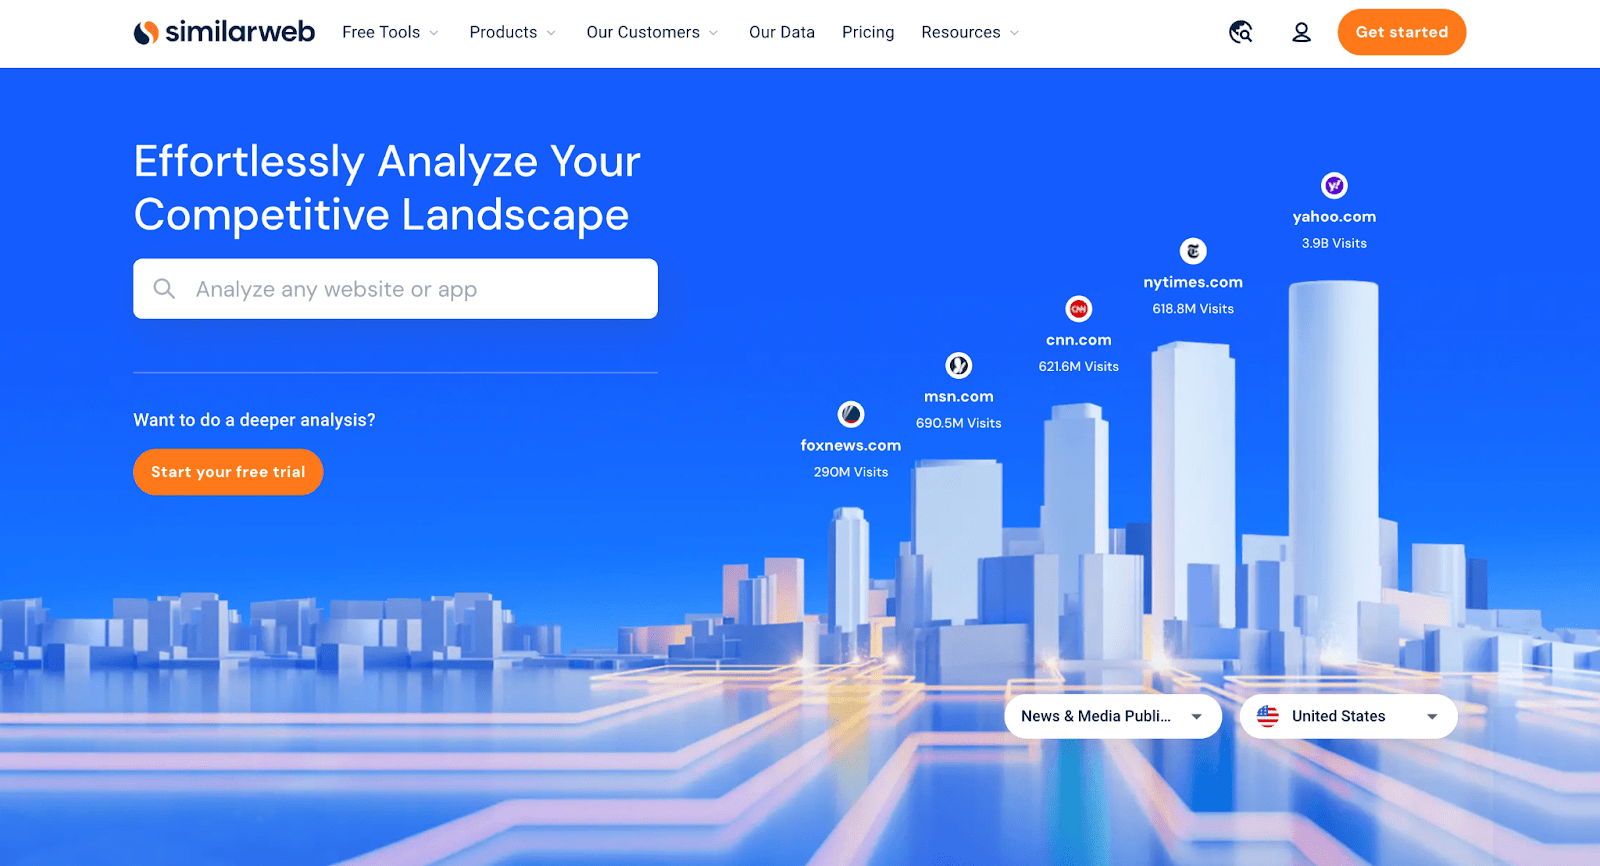 Similarweb's homepage